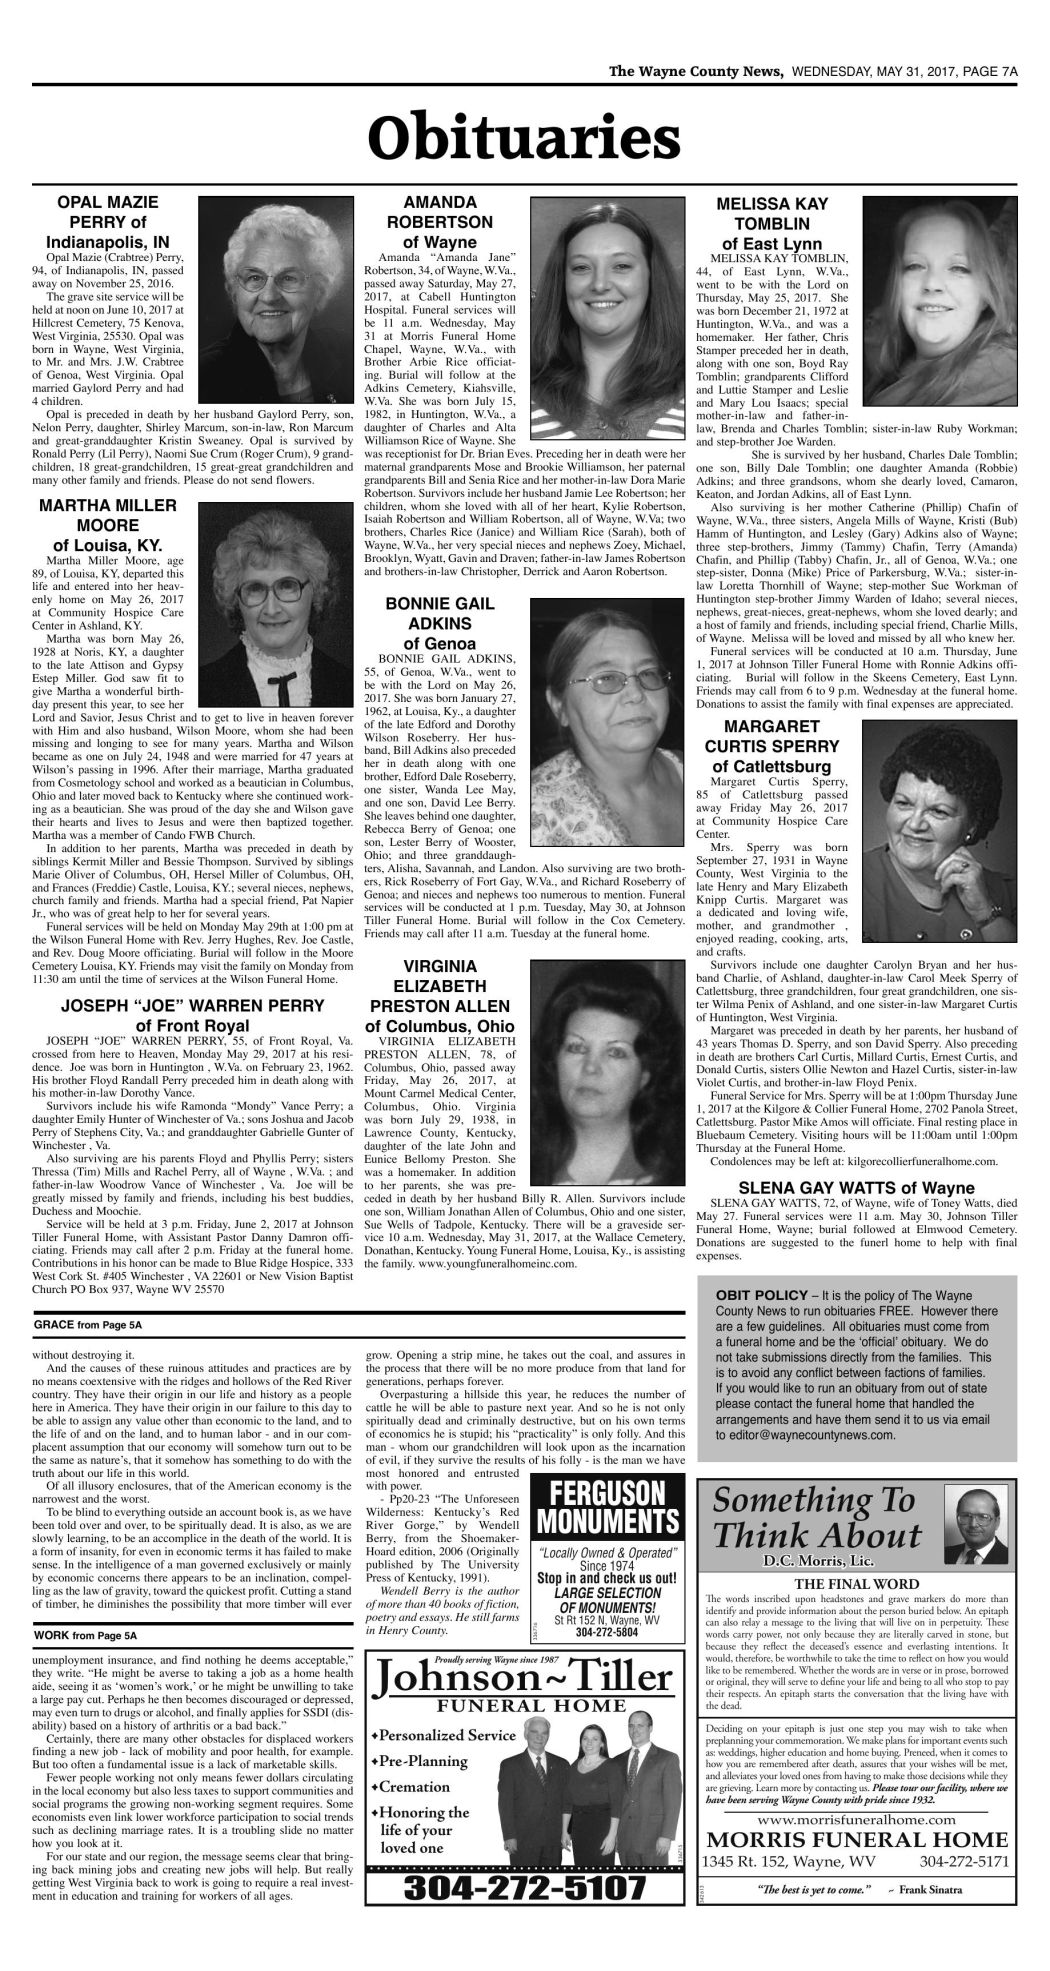 richmond times dispatch obituary doctor sherman mater